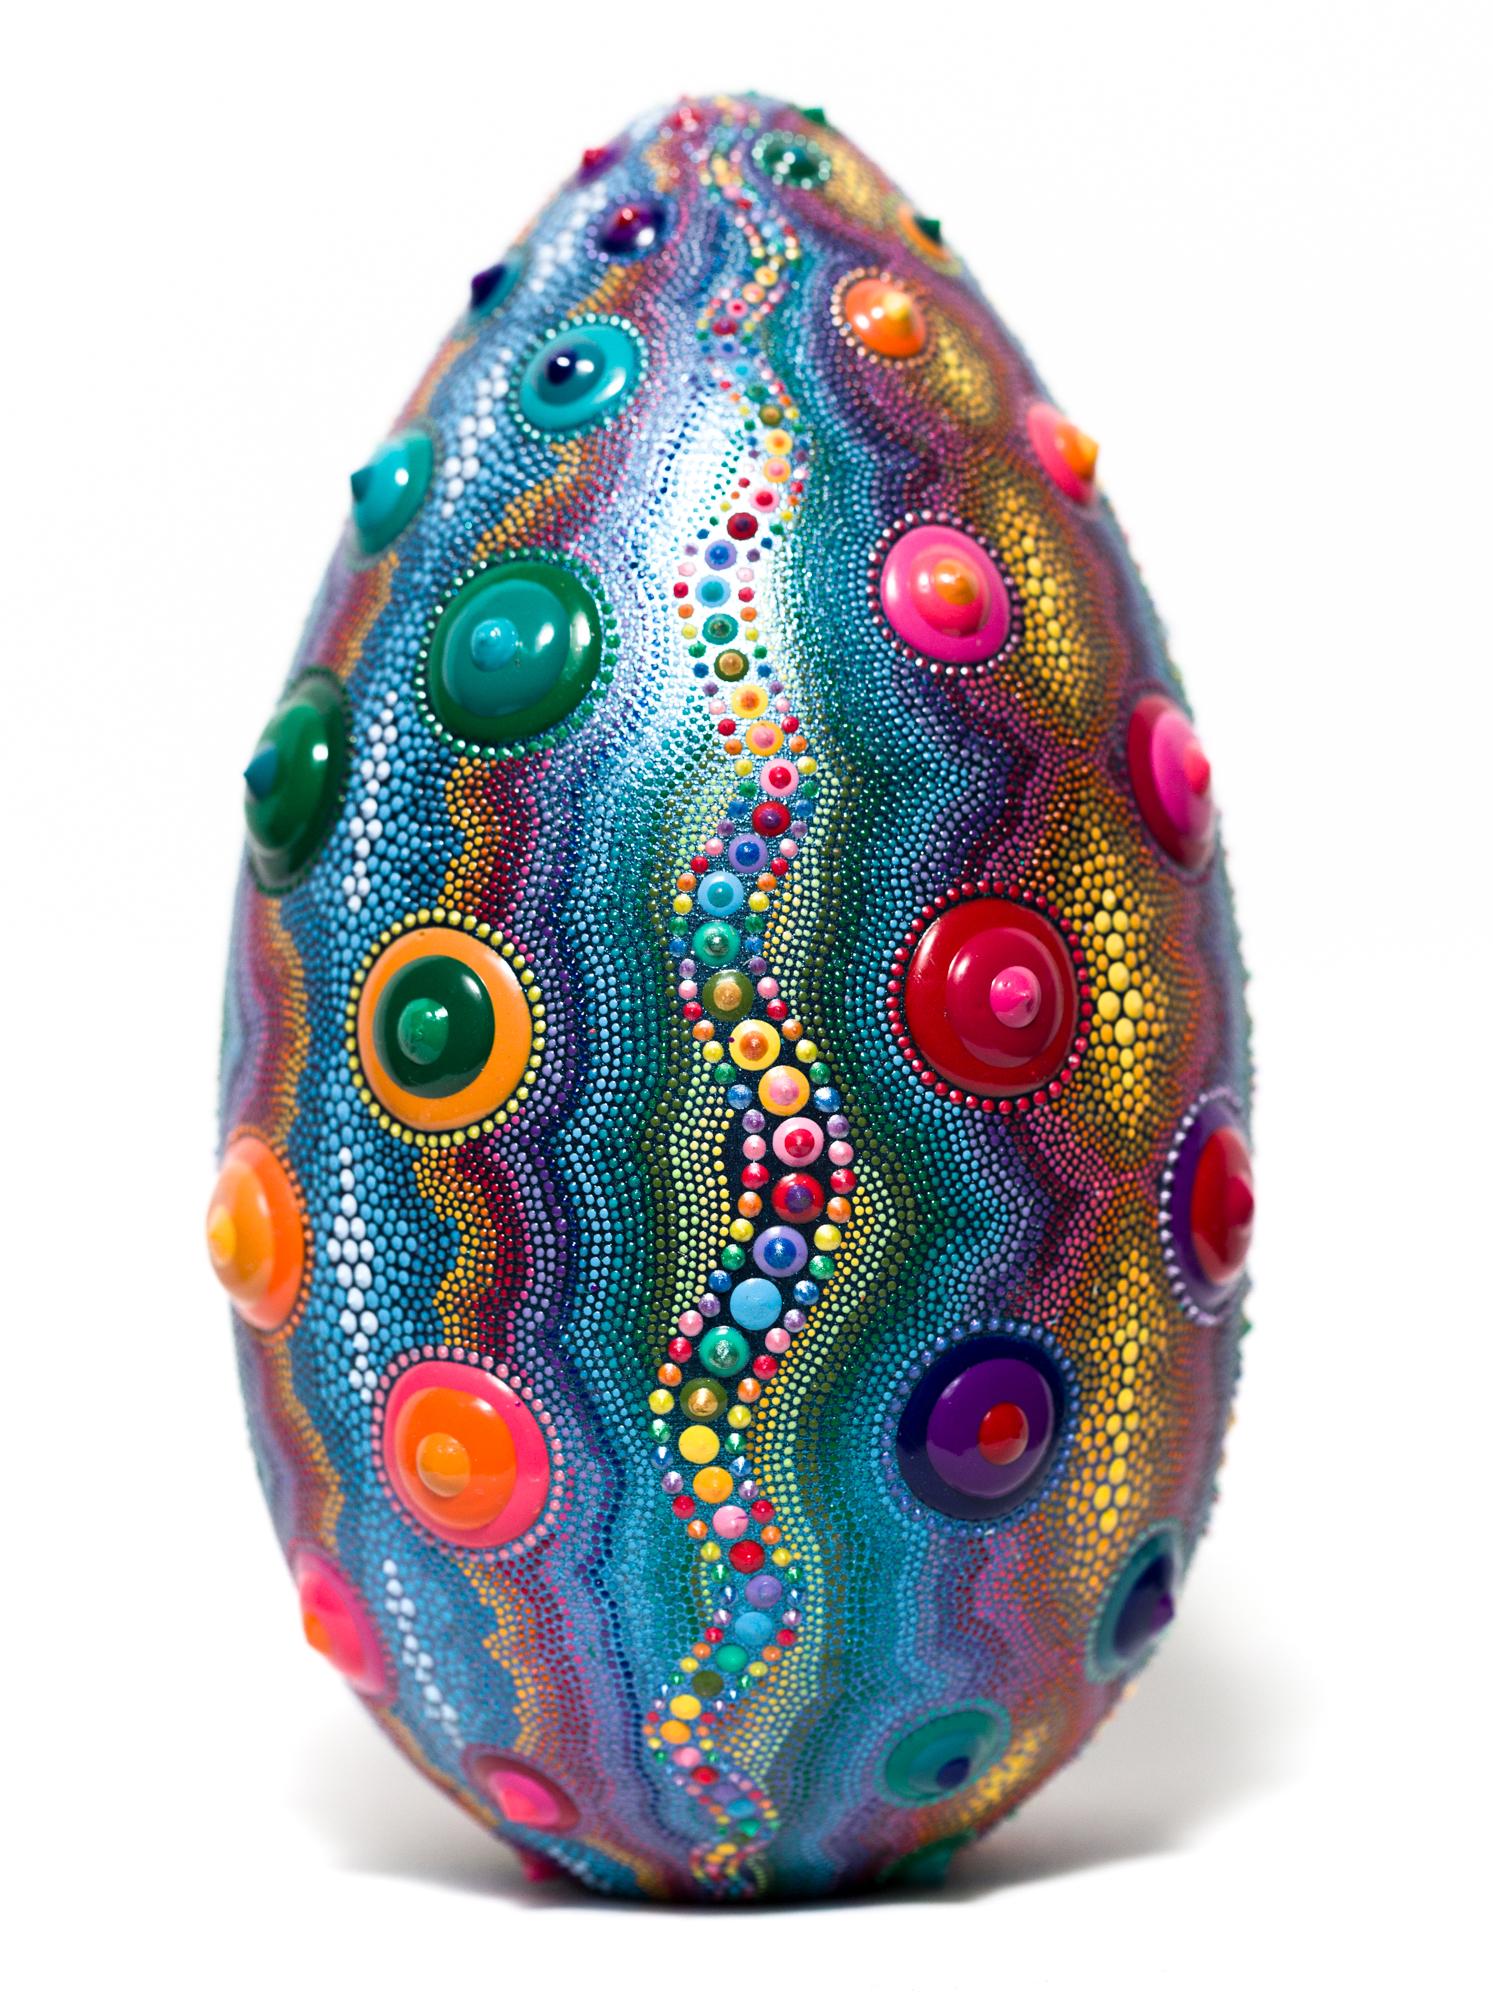 „Candy Urchin Egg“, Eimotiv, Muster, leuchtende Farben, Textur, dimensional